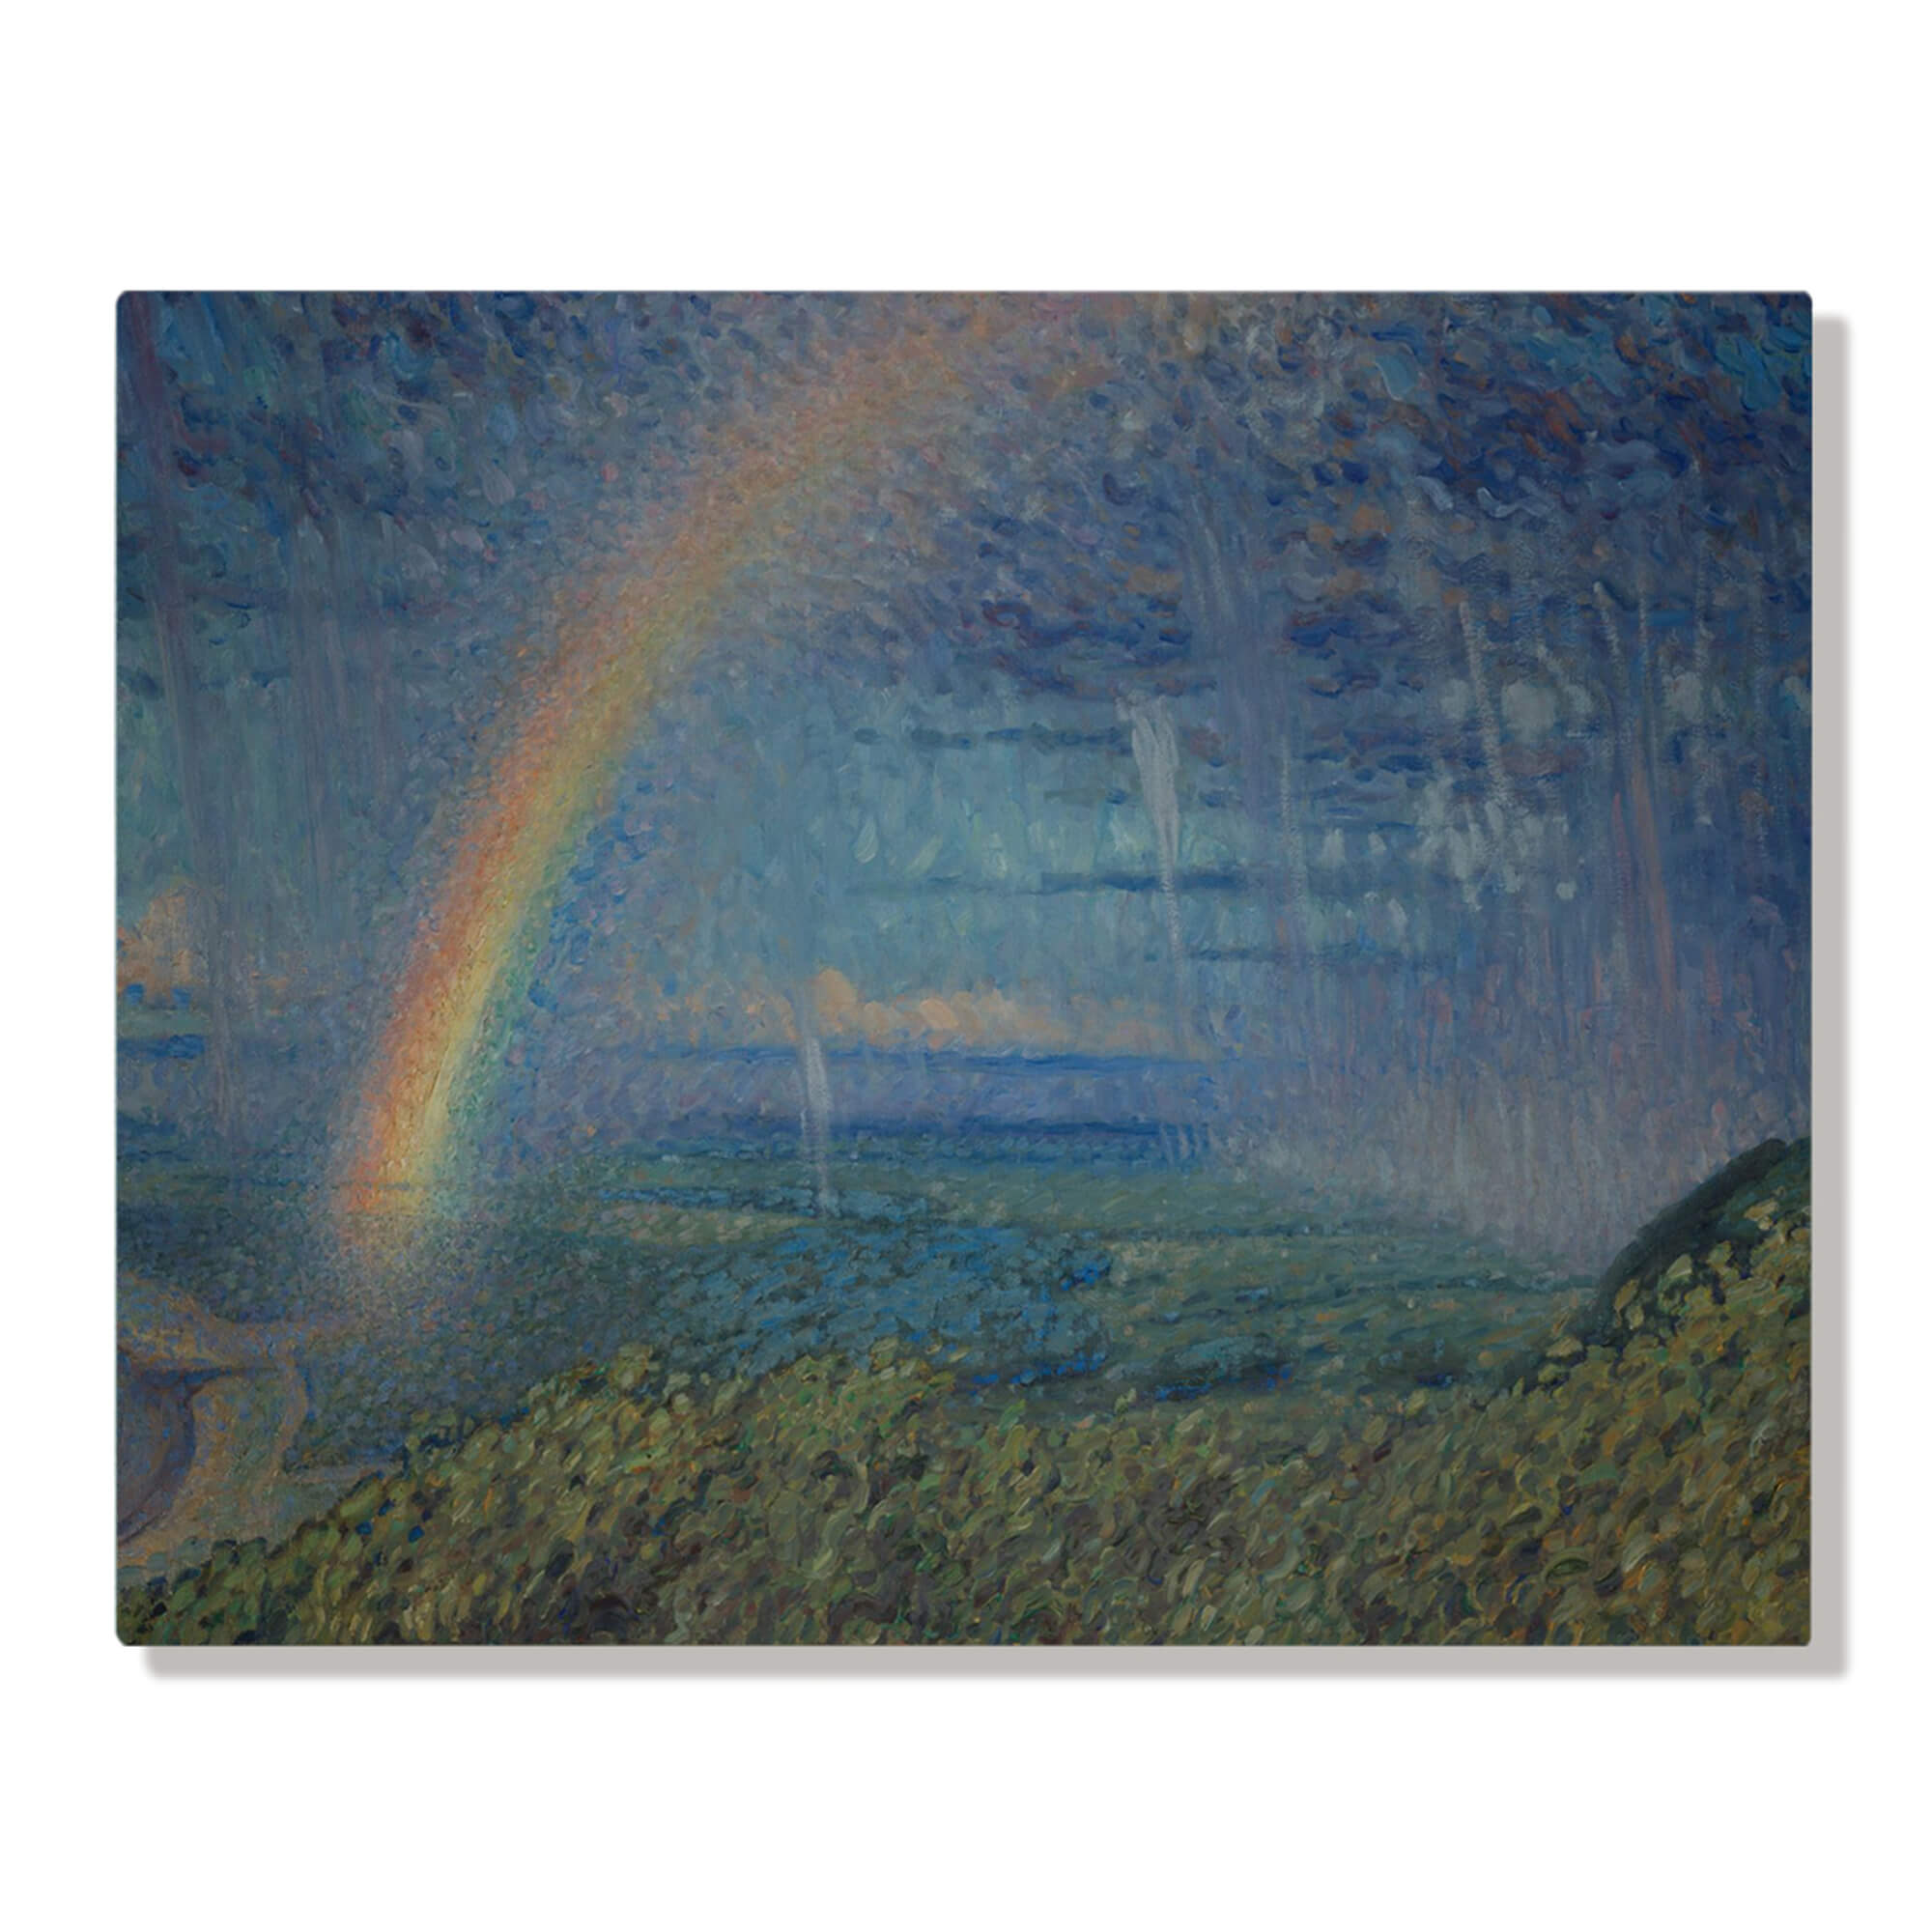 A vintage artwork featuring a gloomy landscape framed a rainbow